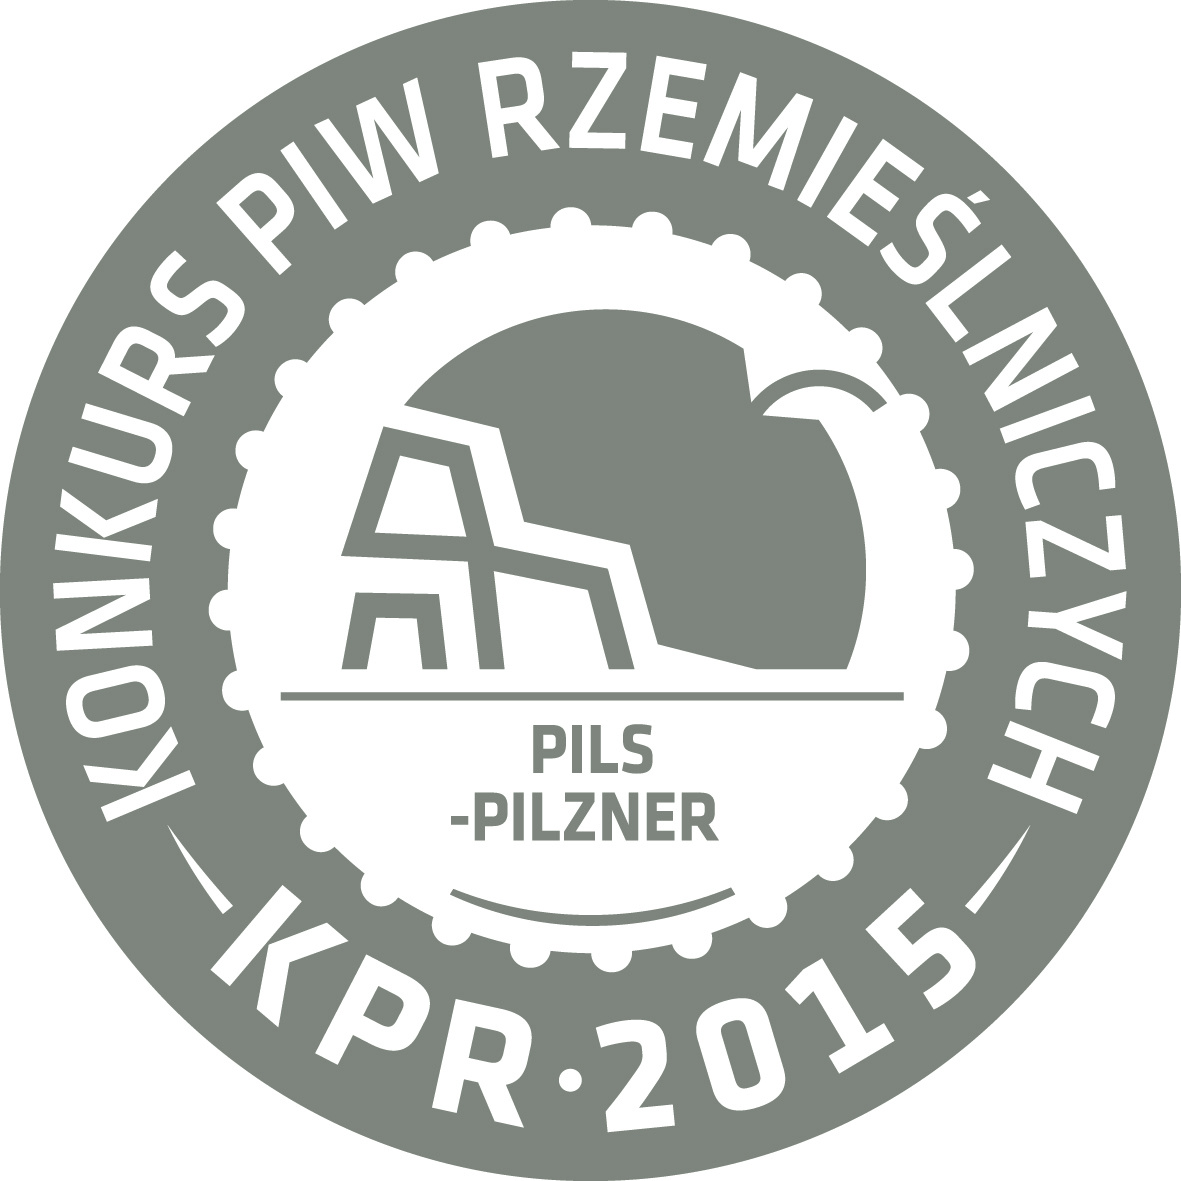 KPR-srebro-pils-pilzner.jpg